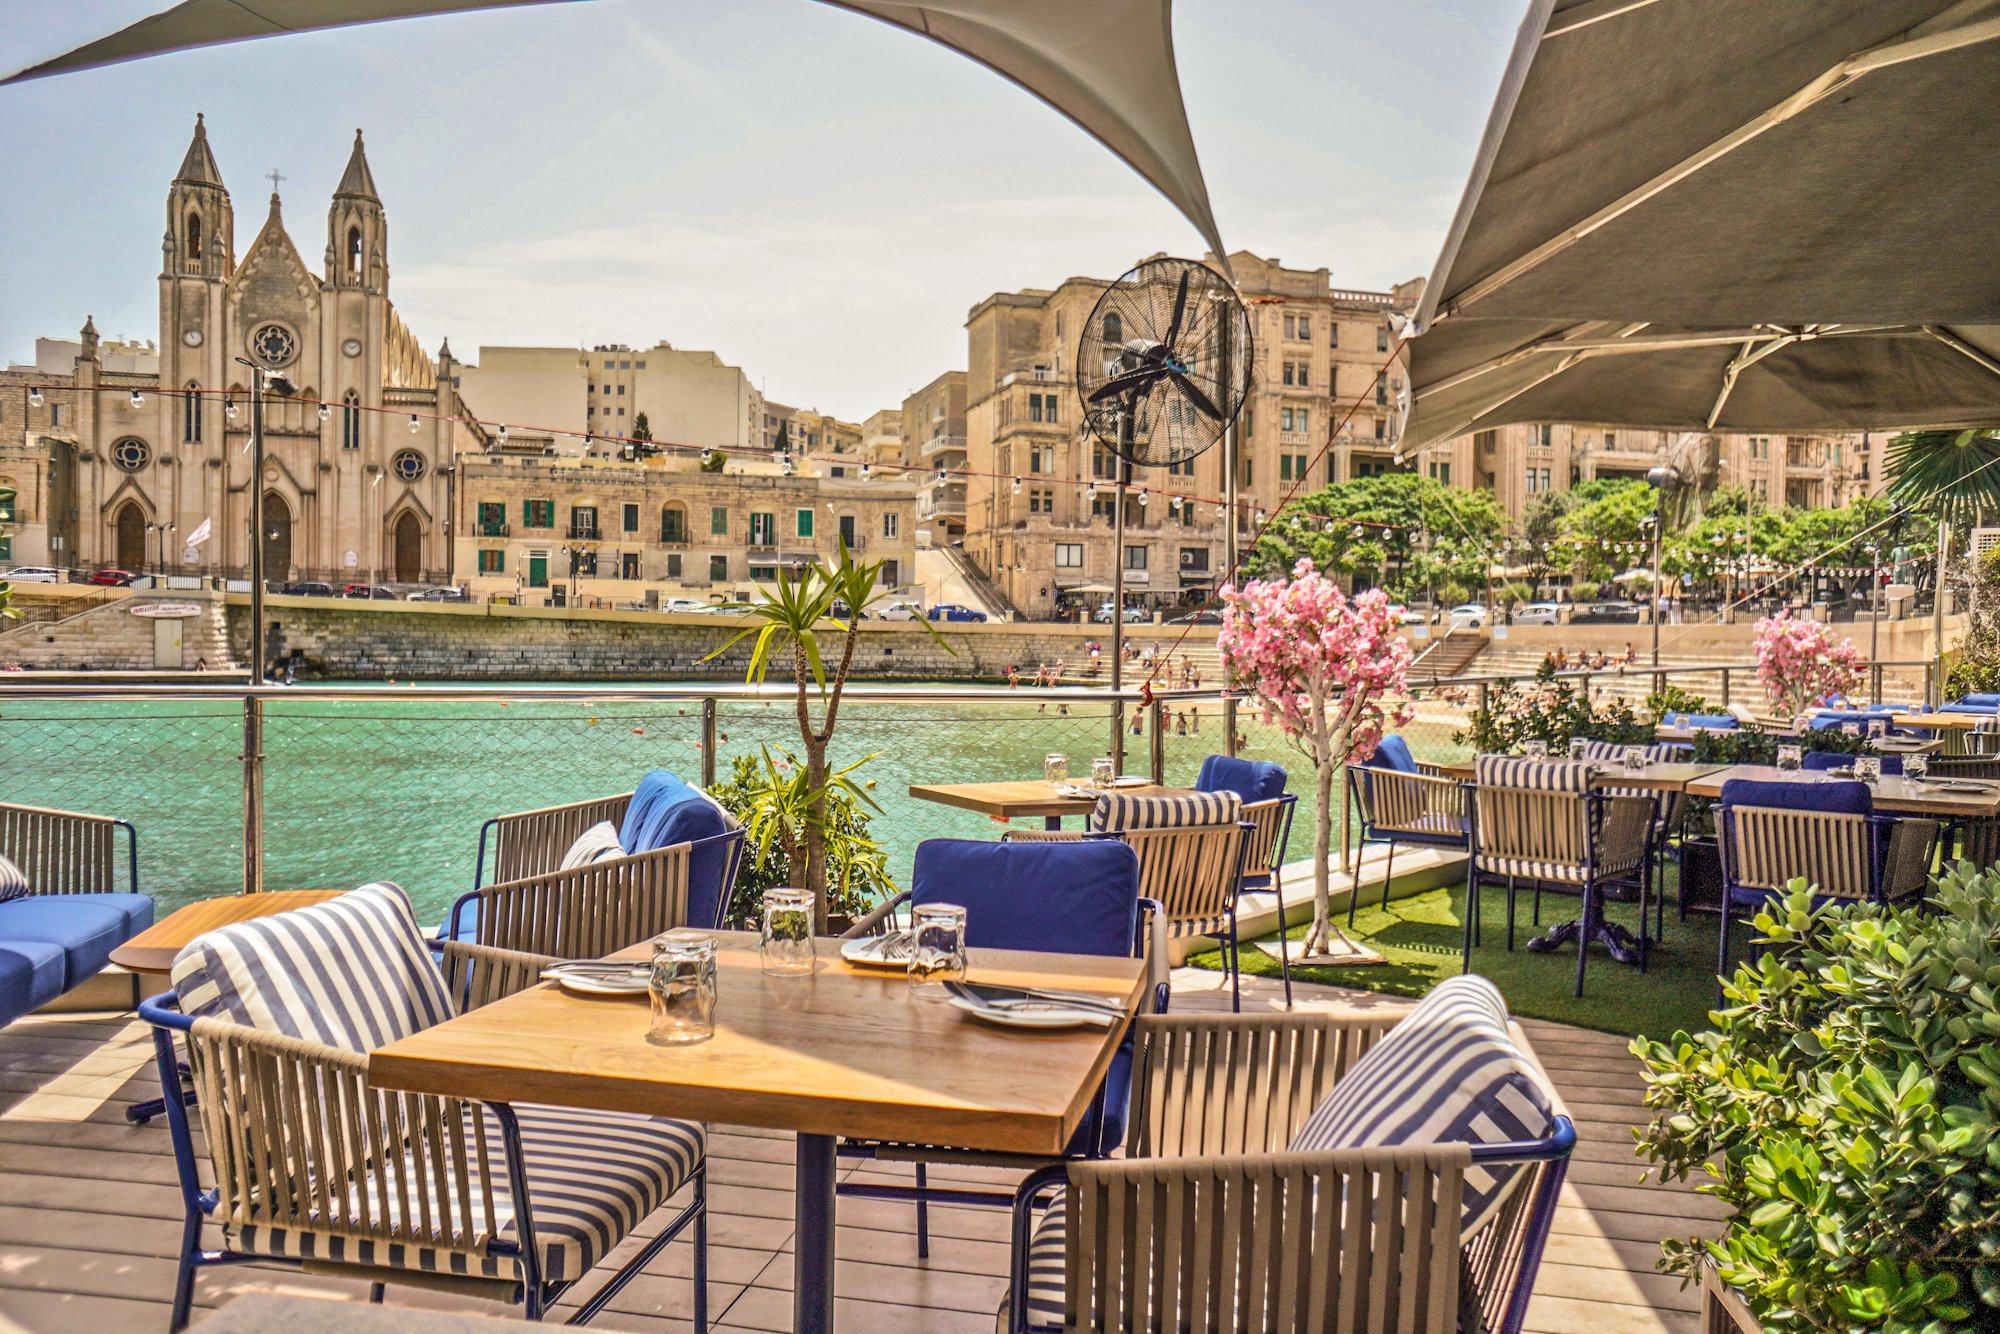 NAAR RestoBar - restaurants in Malta